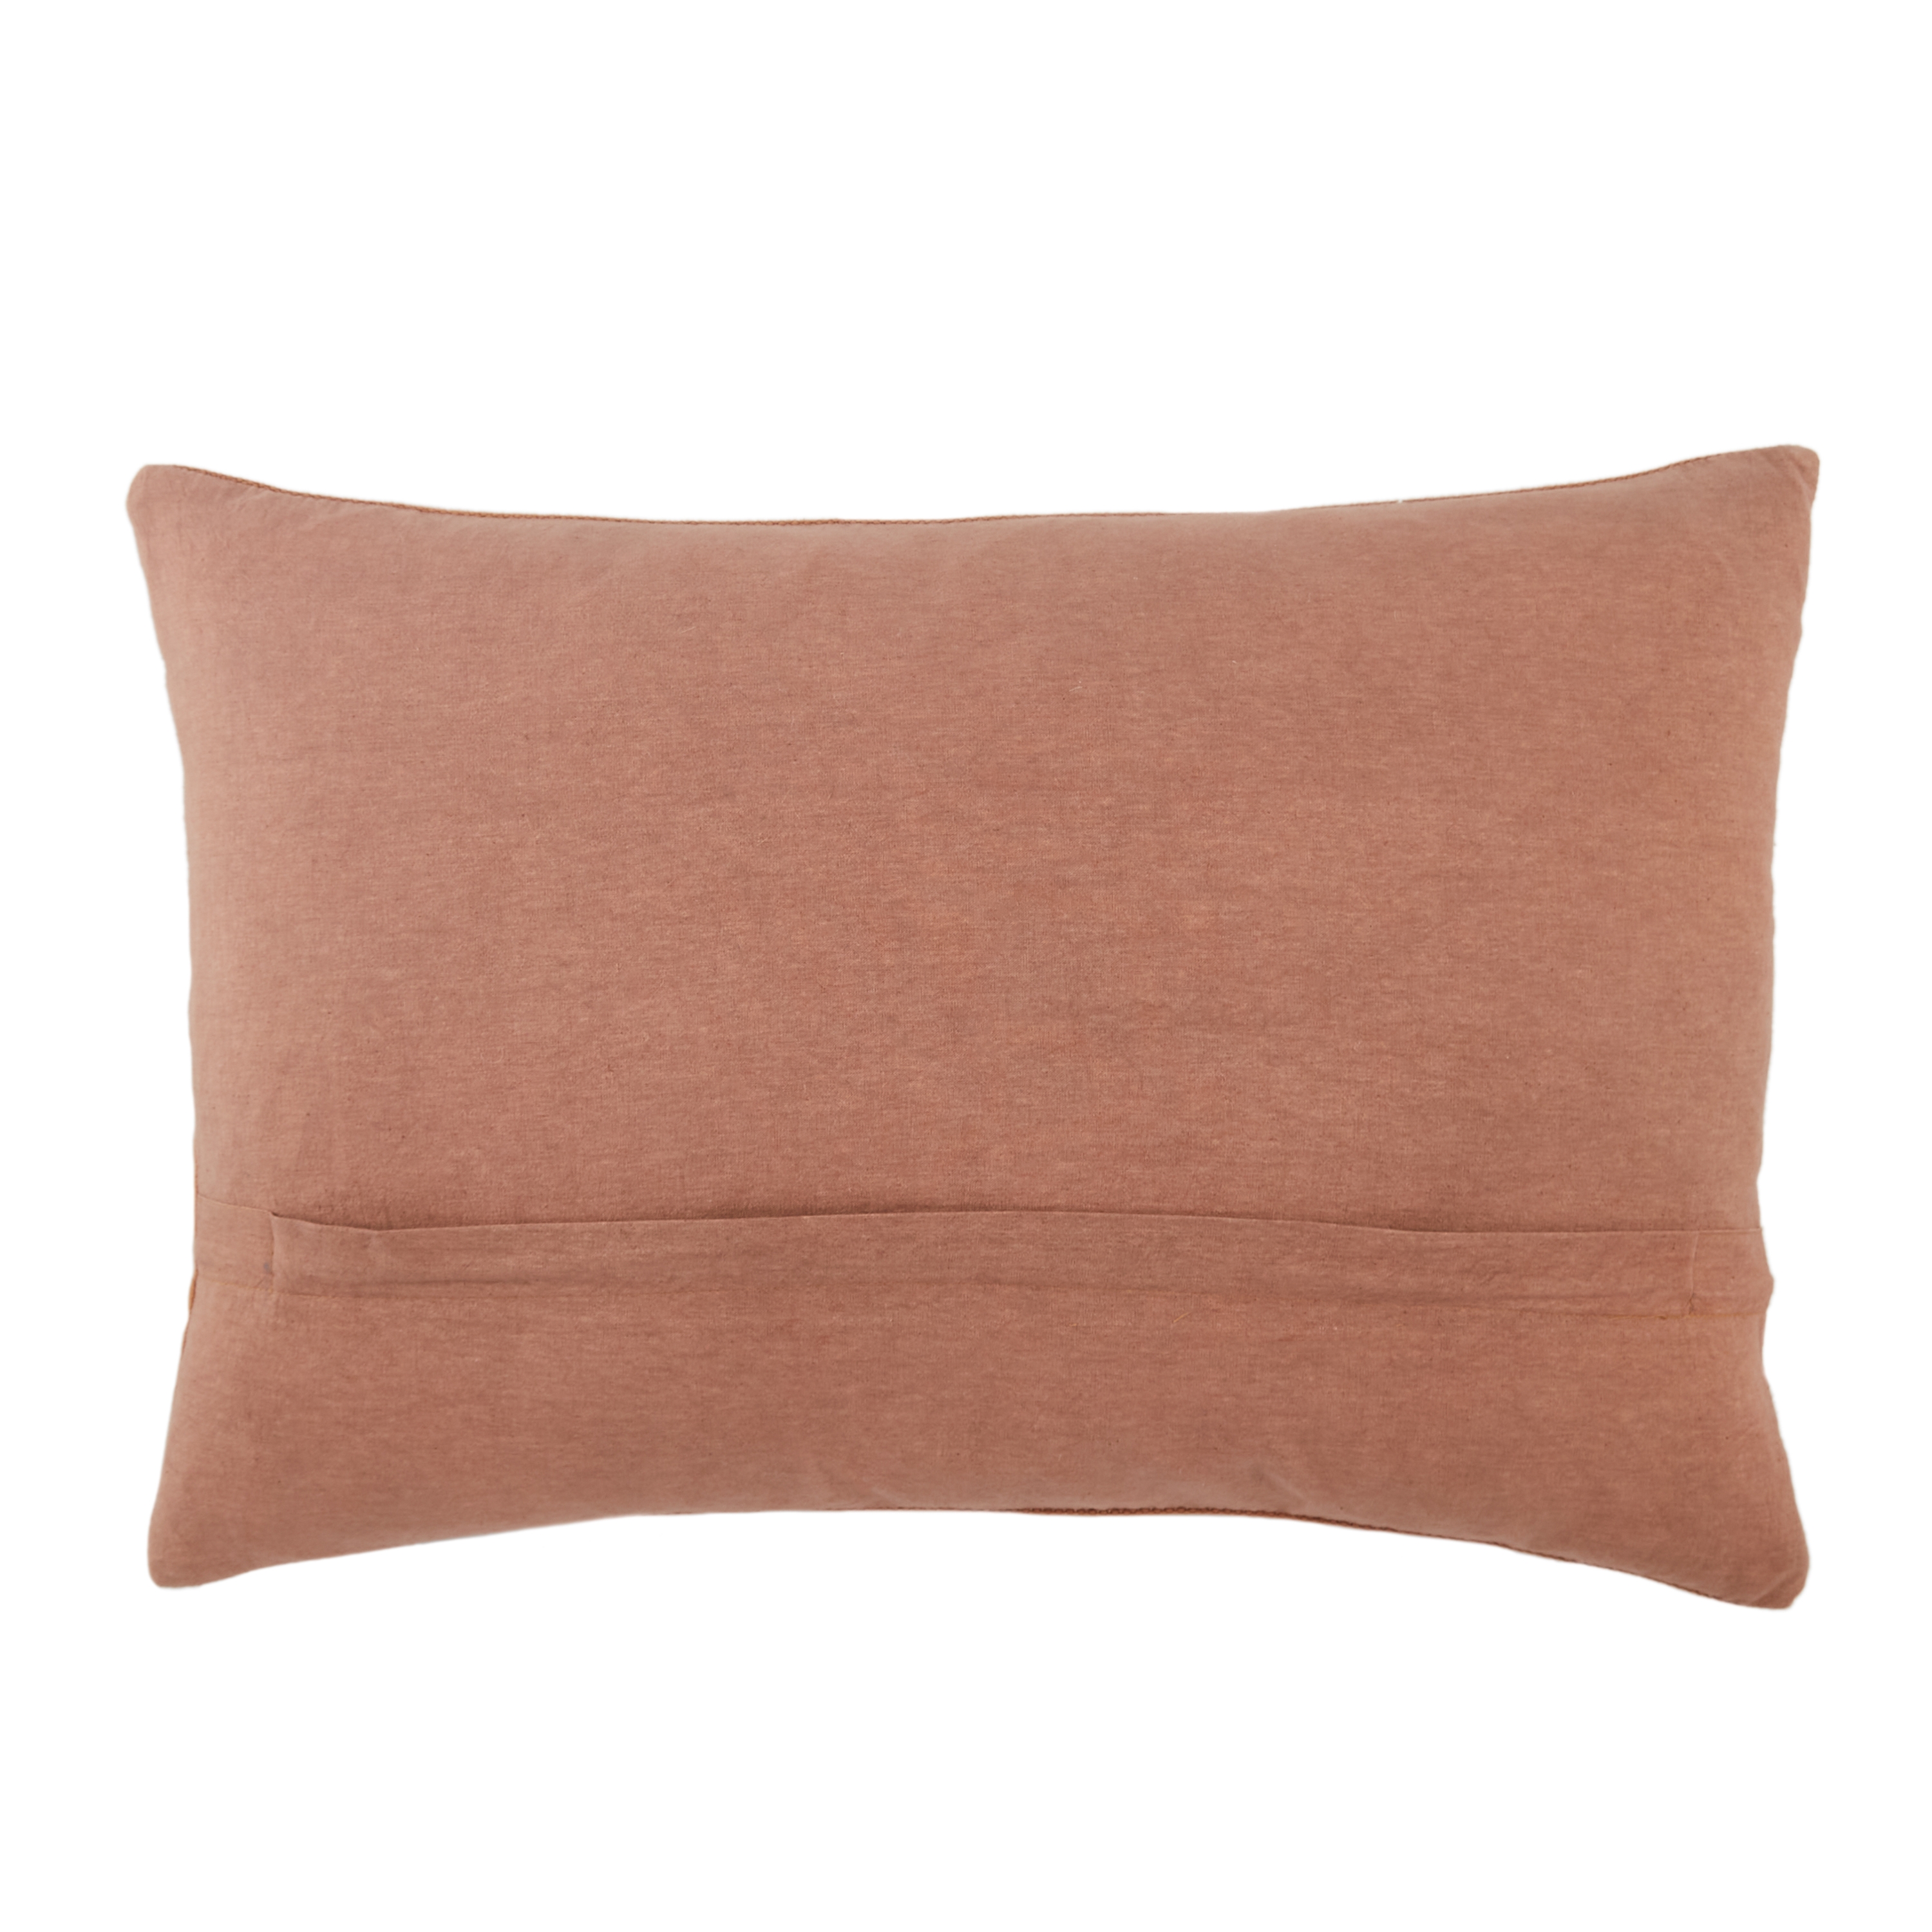 Design (US) Terracotta 16"X24" Pillow - Image 1